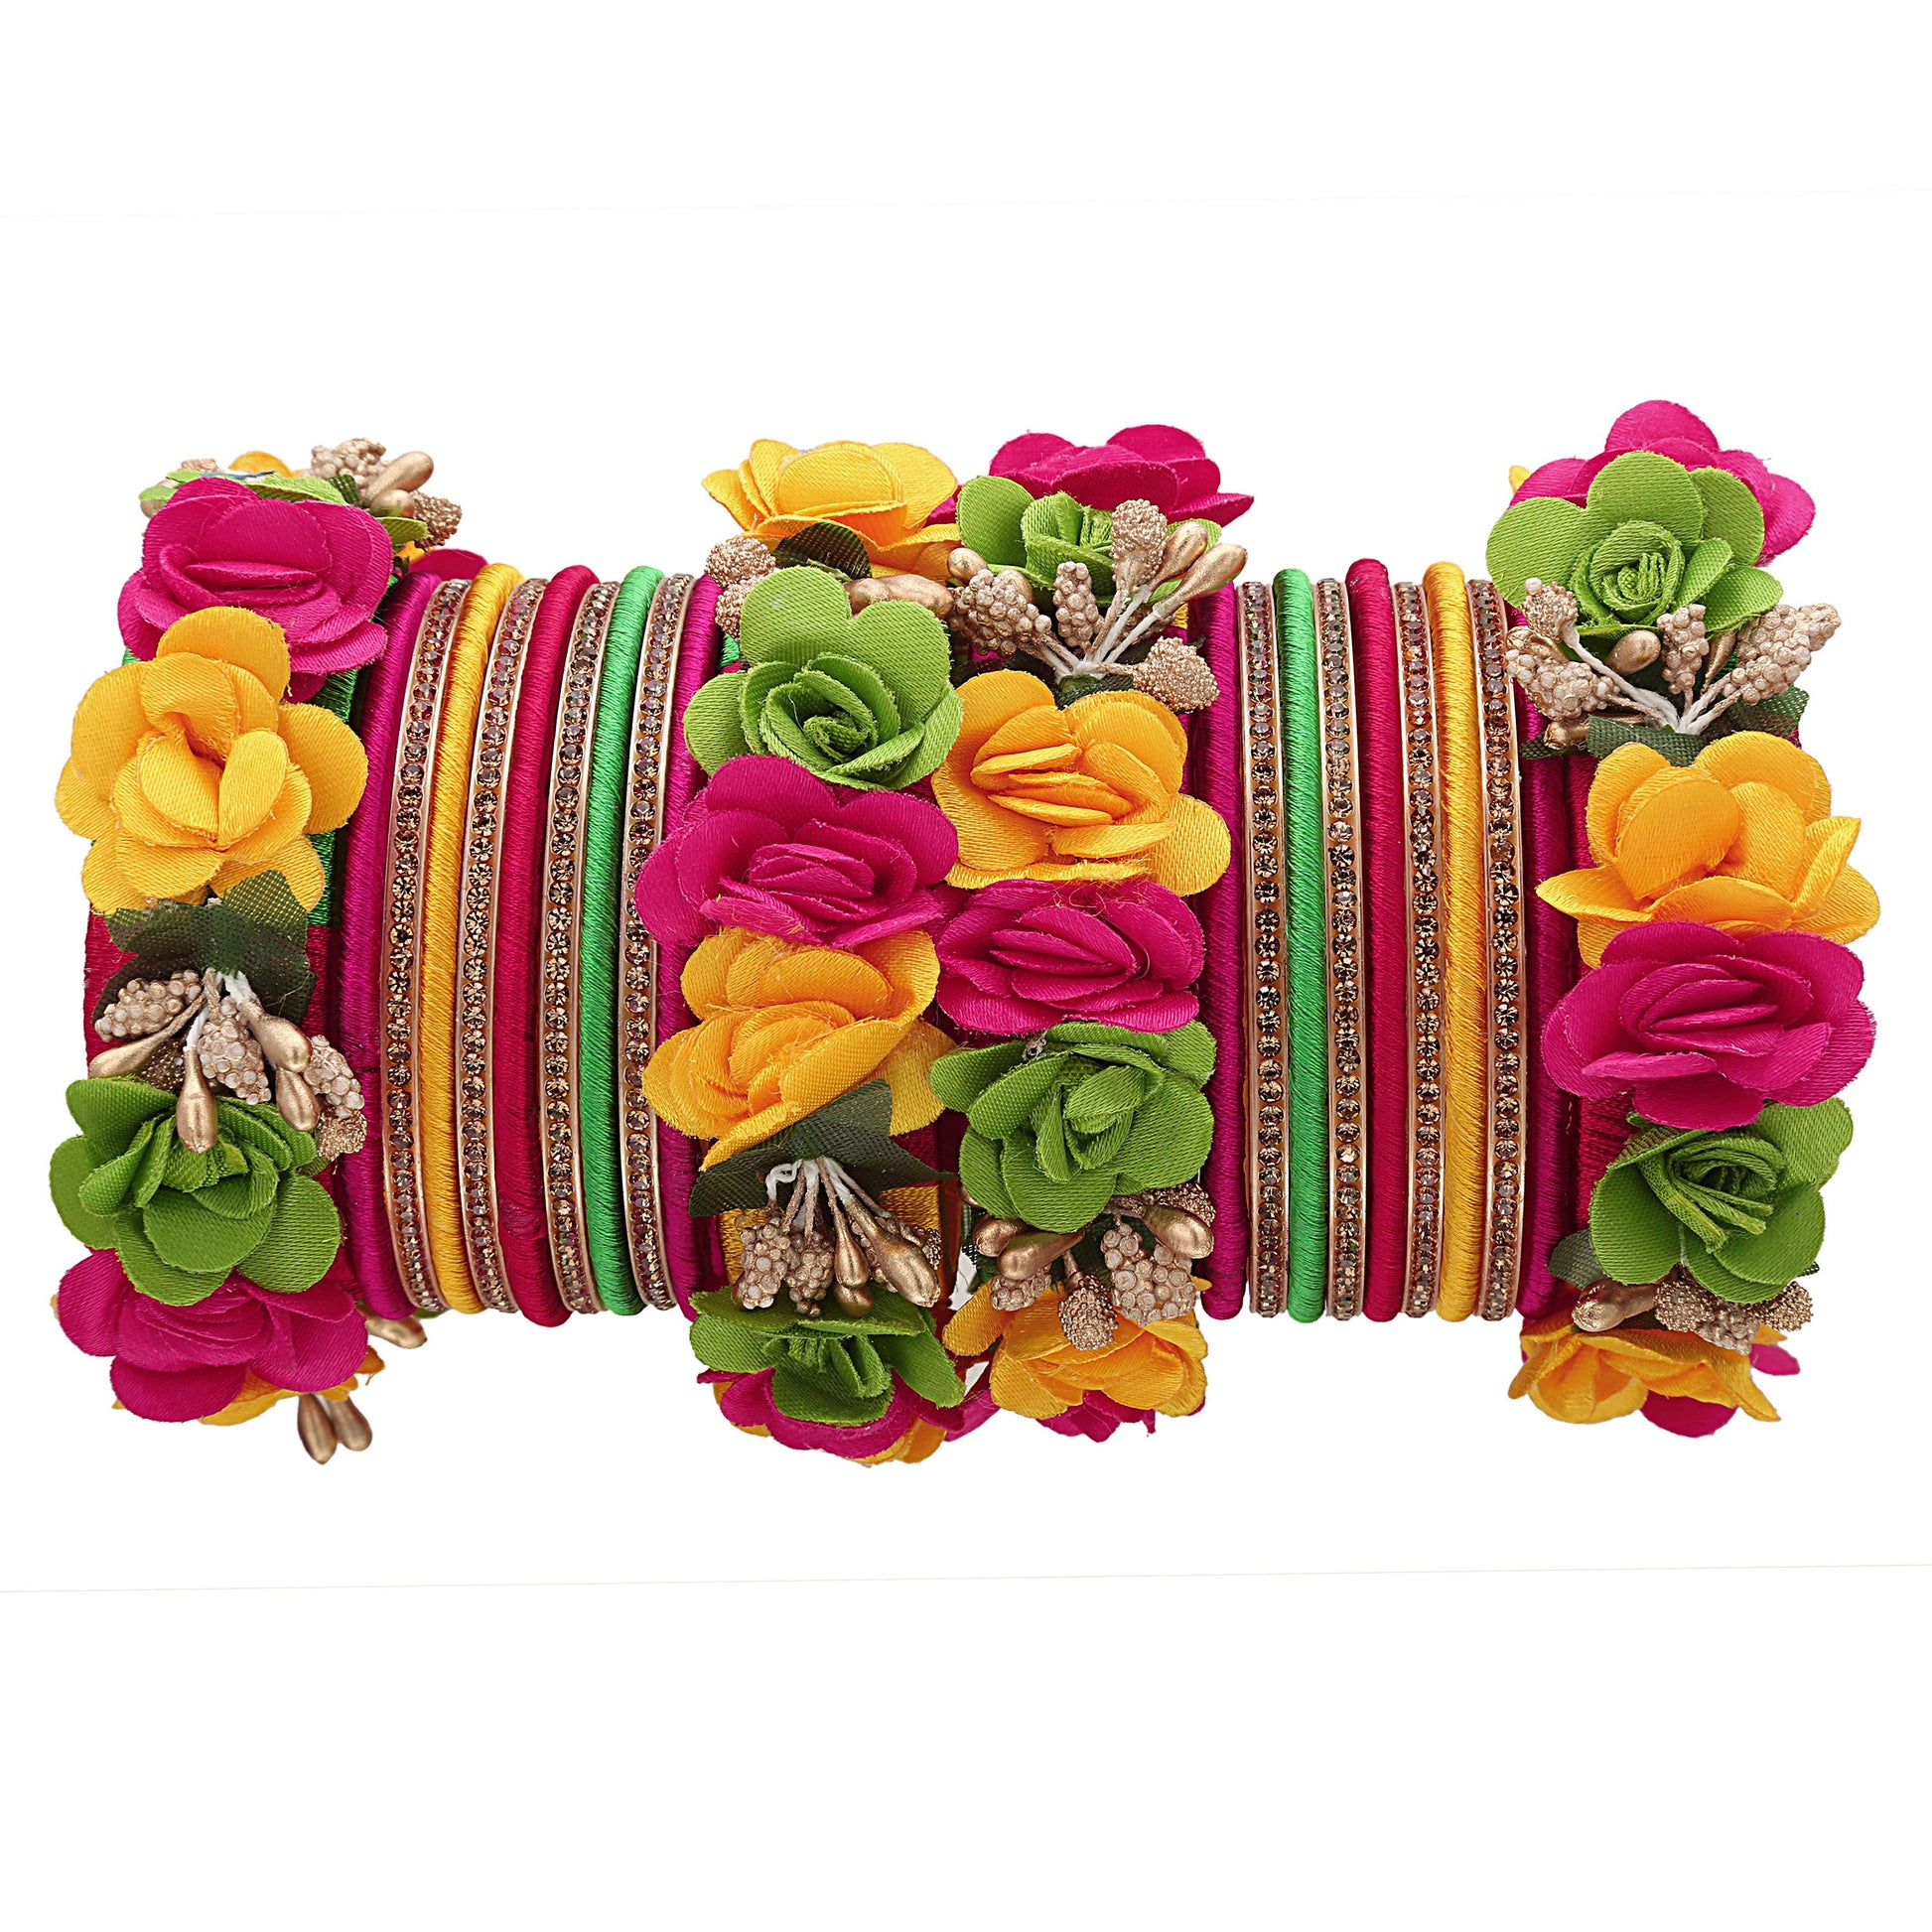 sukriti beautiful handcrafted multicolor flower designer silk thread bridal chuda wedding bangles for women – set of 22